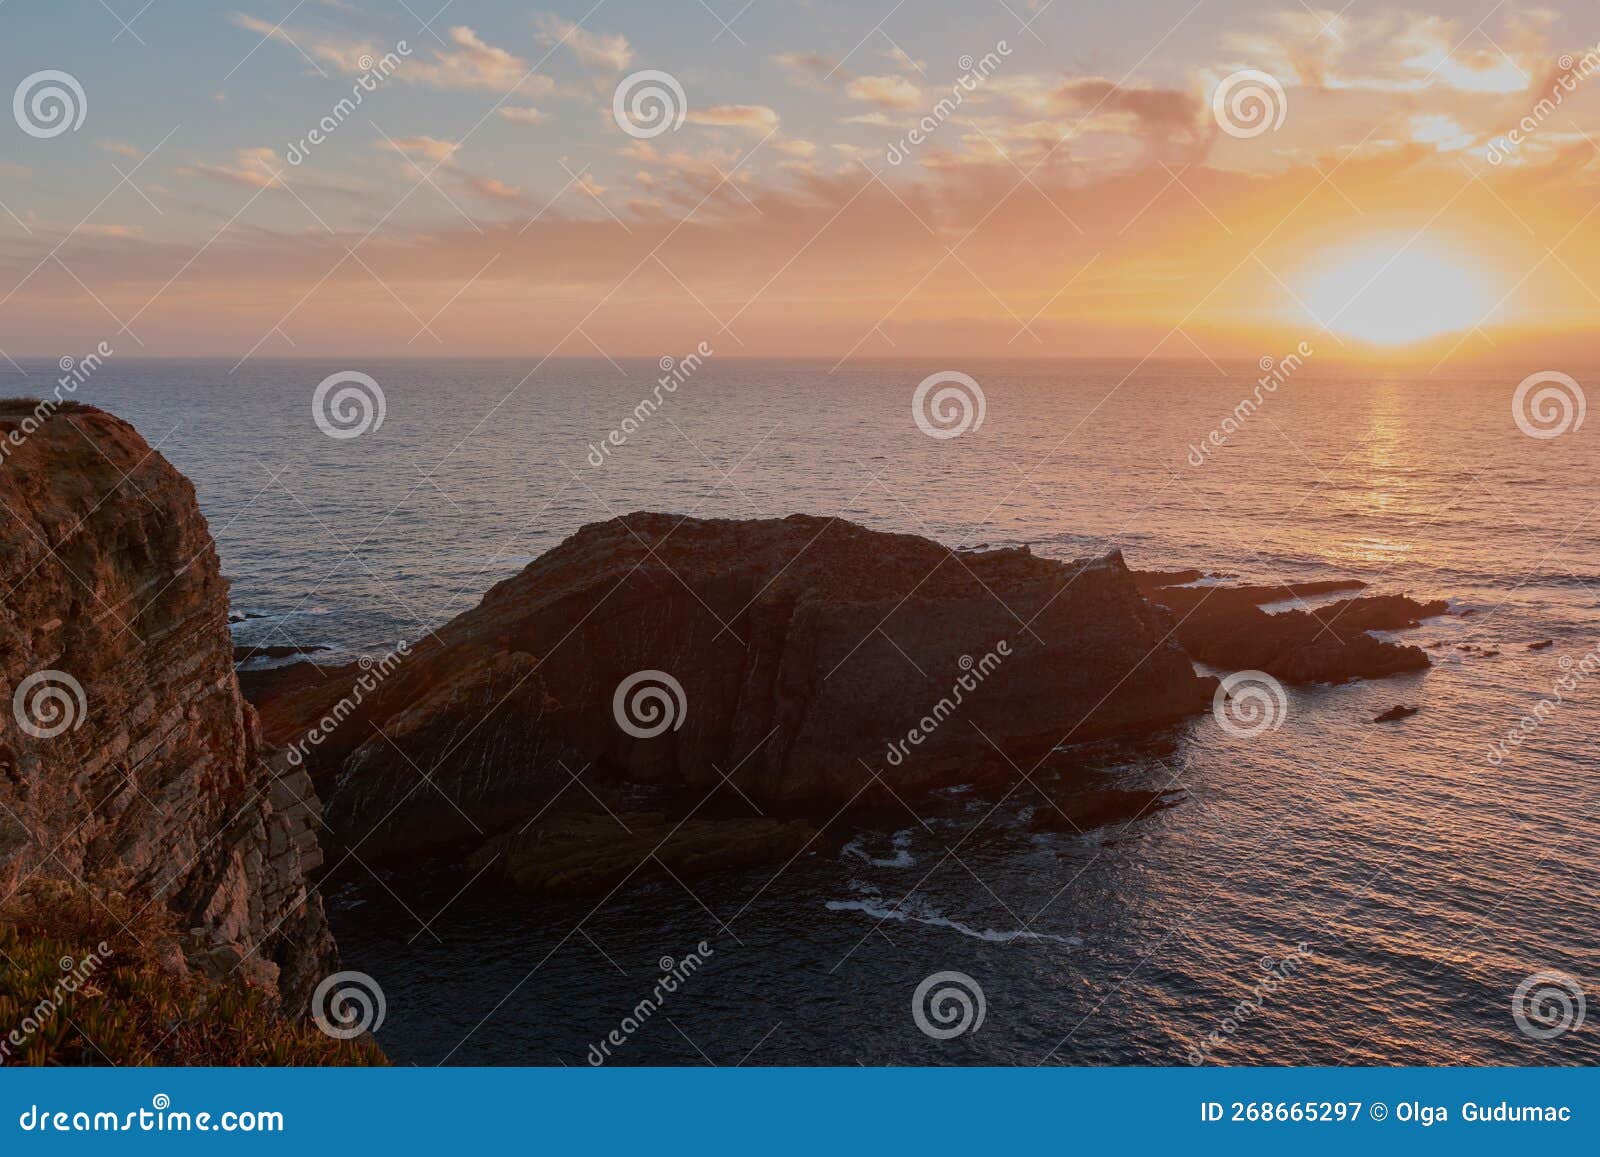 stunning sunset over the ocean. west of algarve, portugal